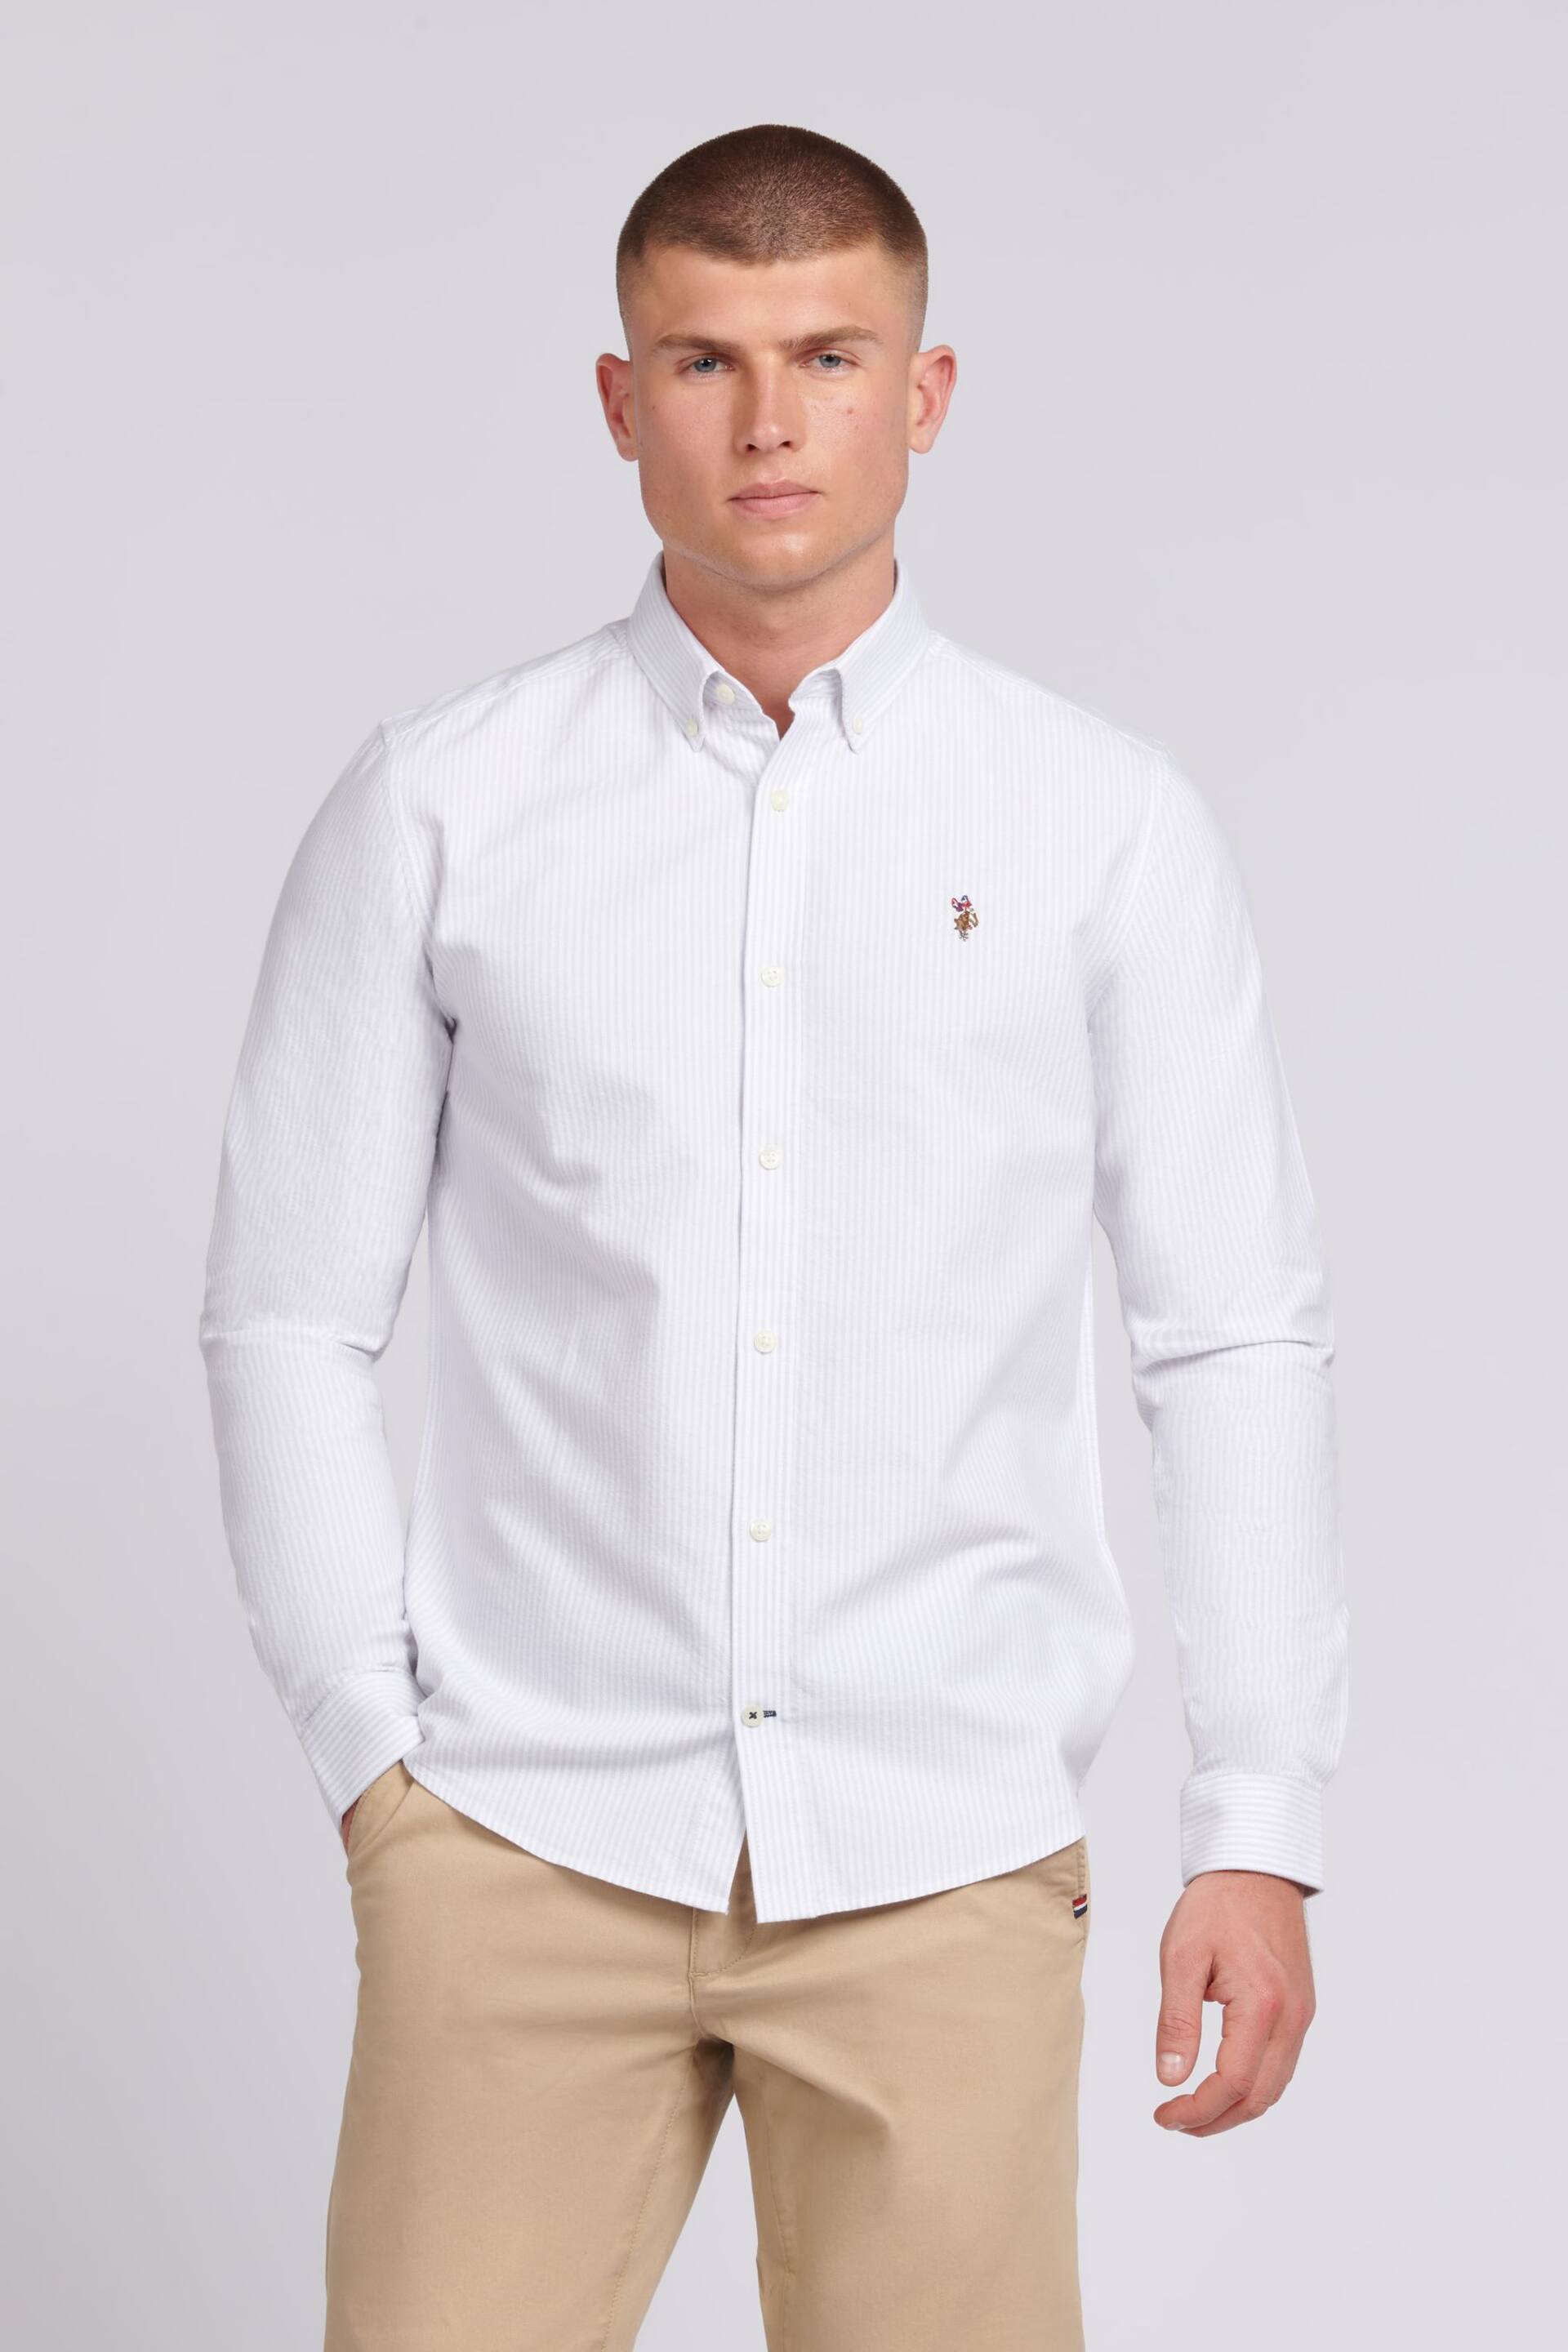 U.S. Polo Assn. Mens White Oxford Stripe Shirt - Image 1 of 6